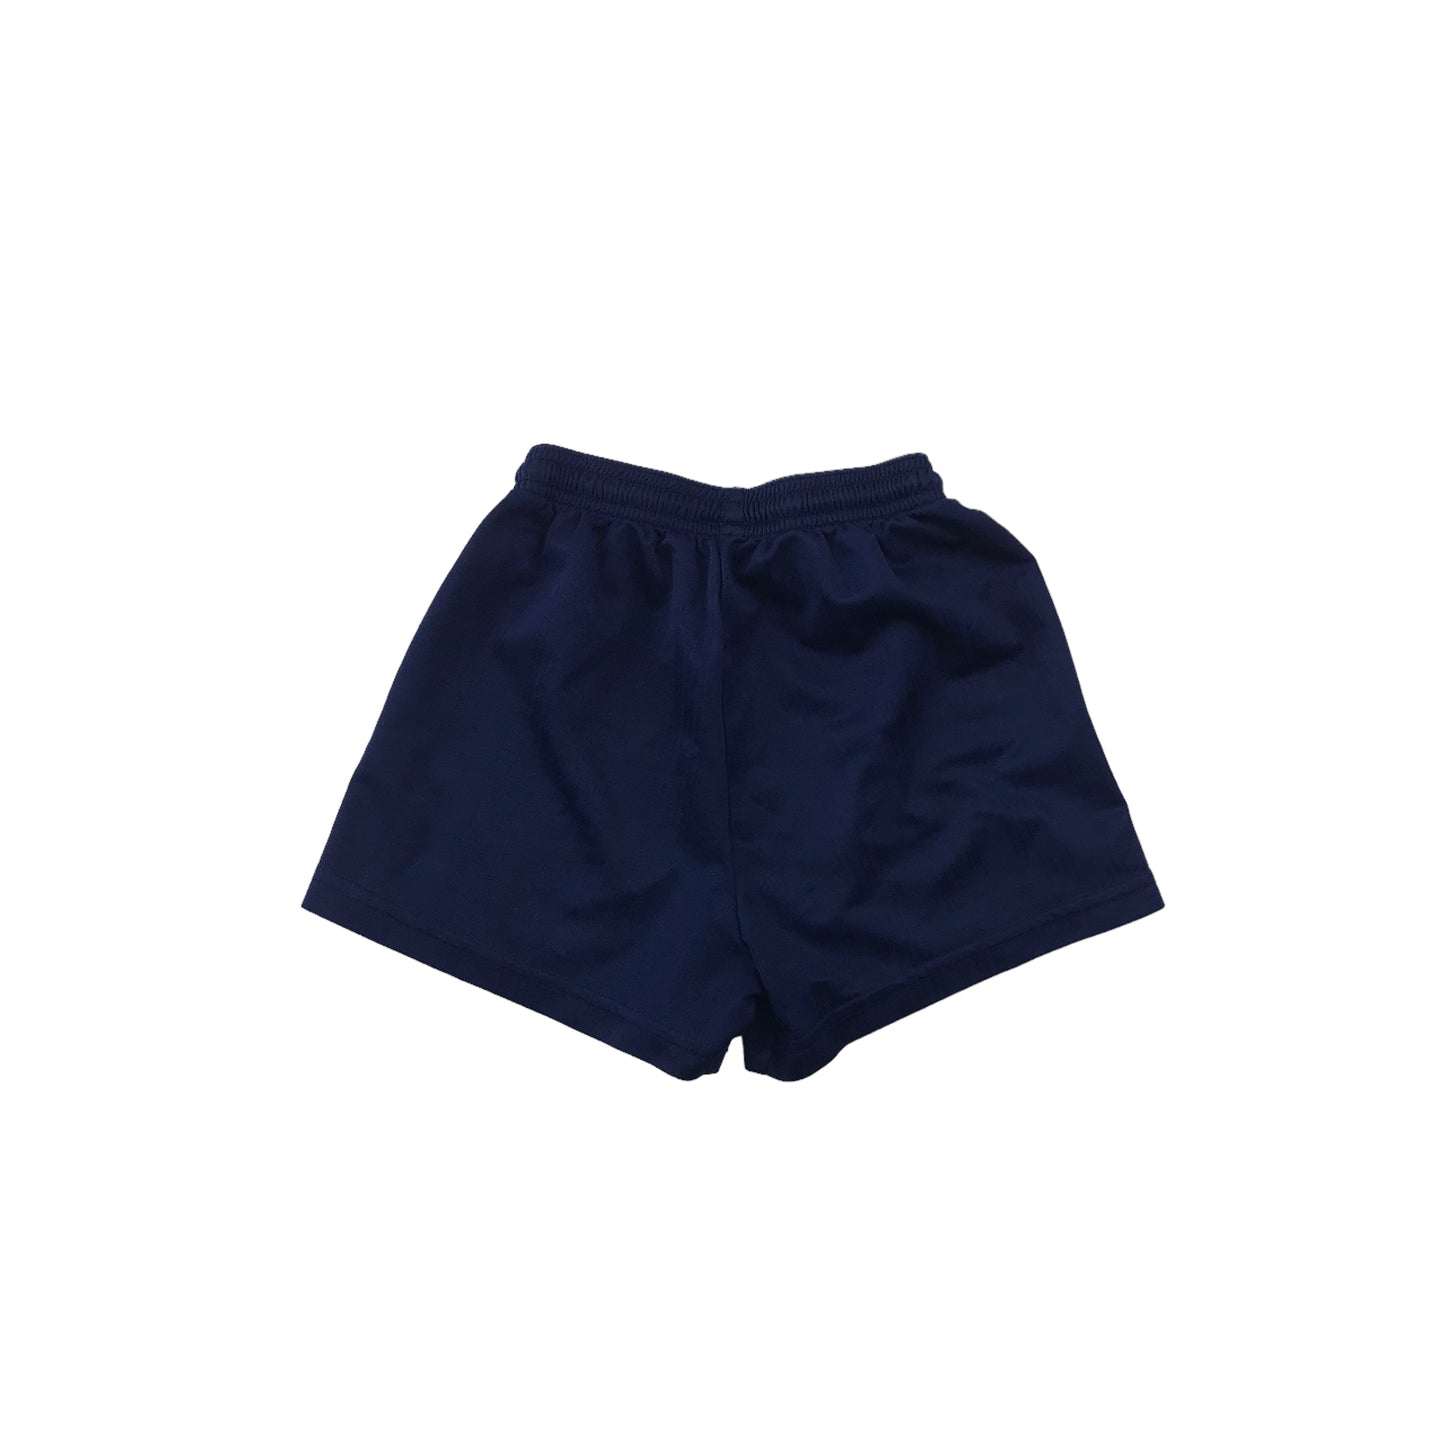 Adidas Navy Football style Sport shorts Age 5